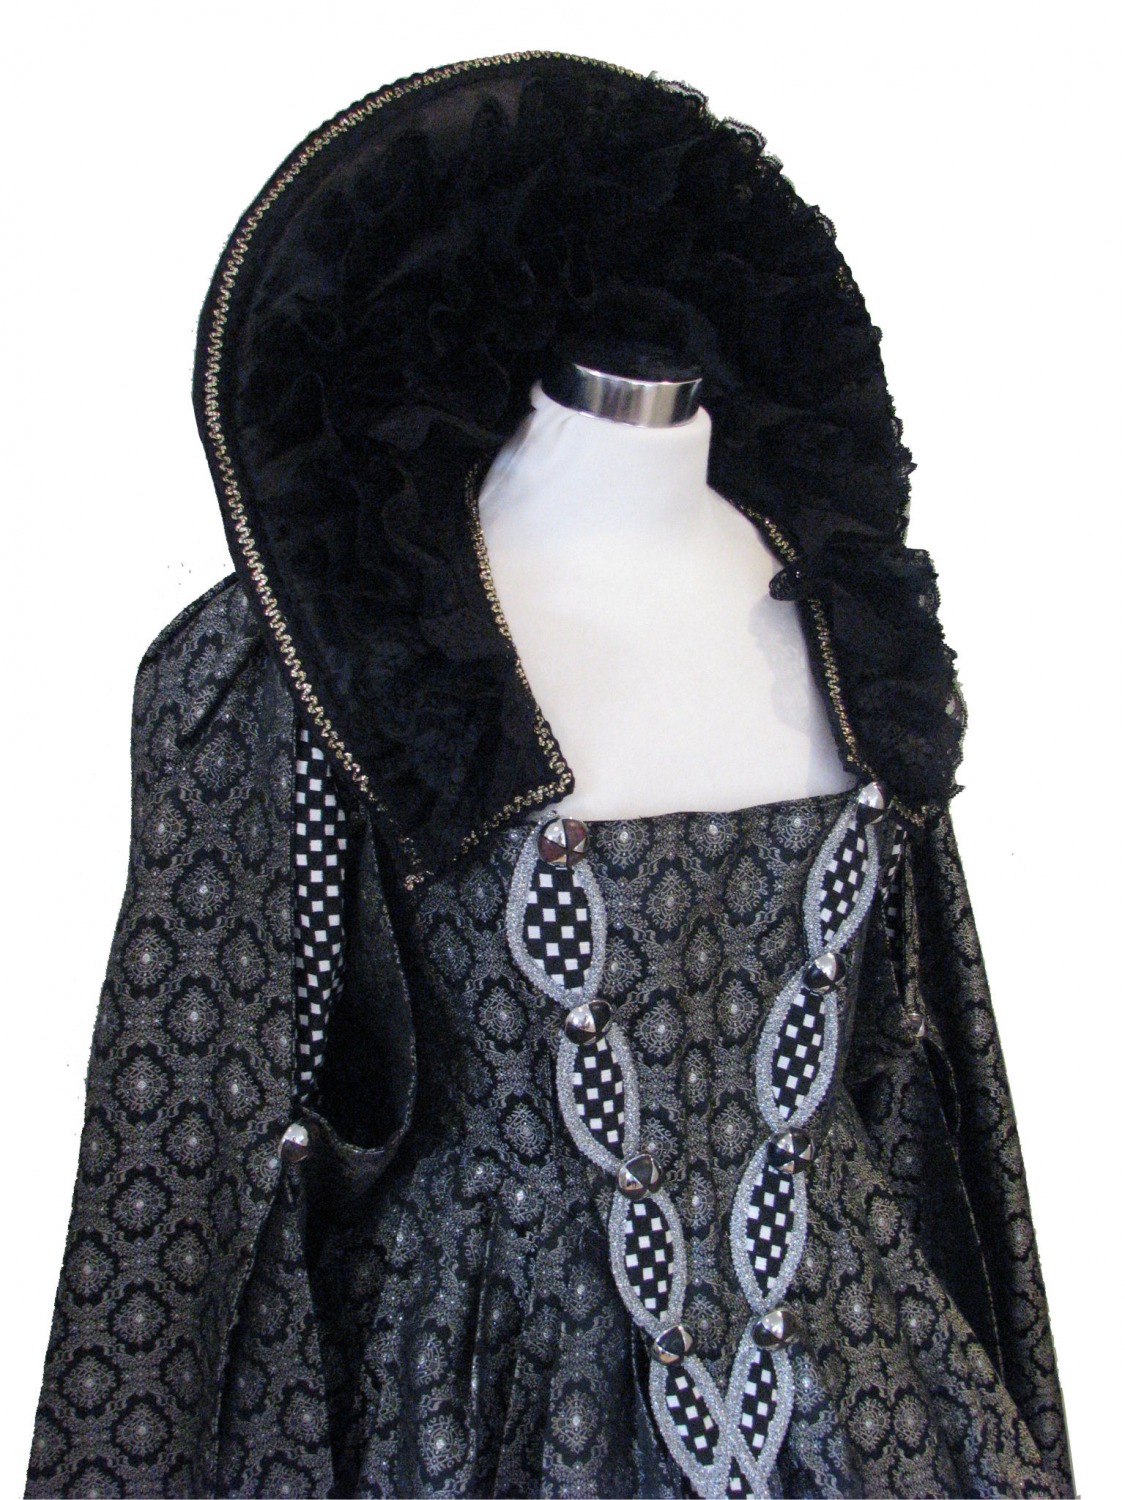 Ladies Medieval Tudor Elizabeth 1st Costume Size 6 - 8 Image